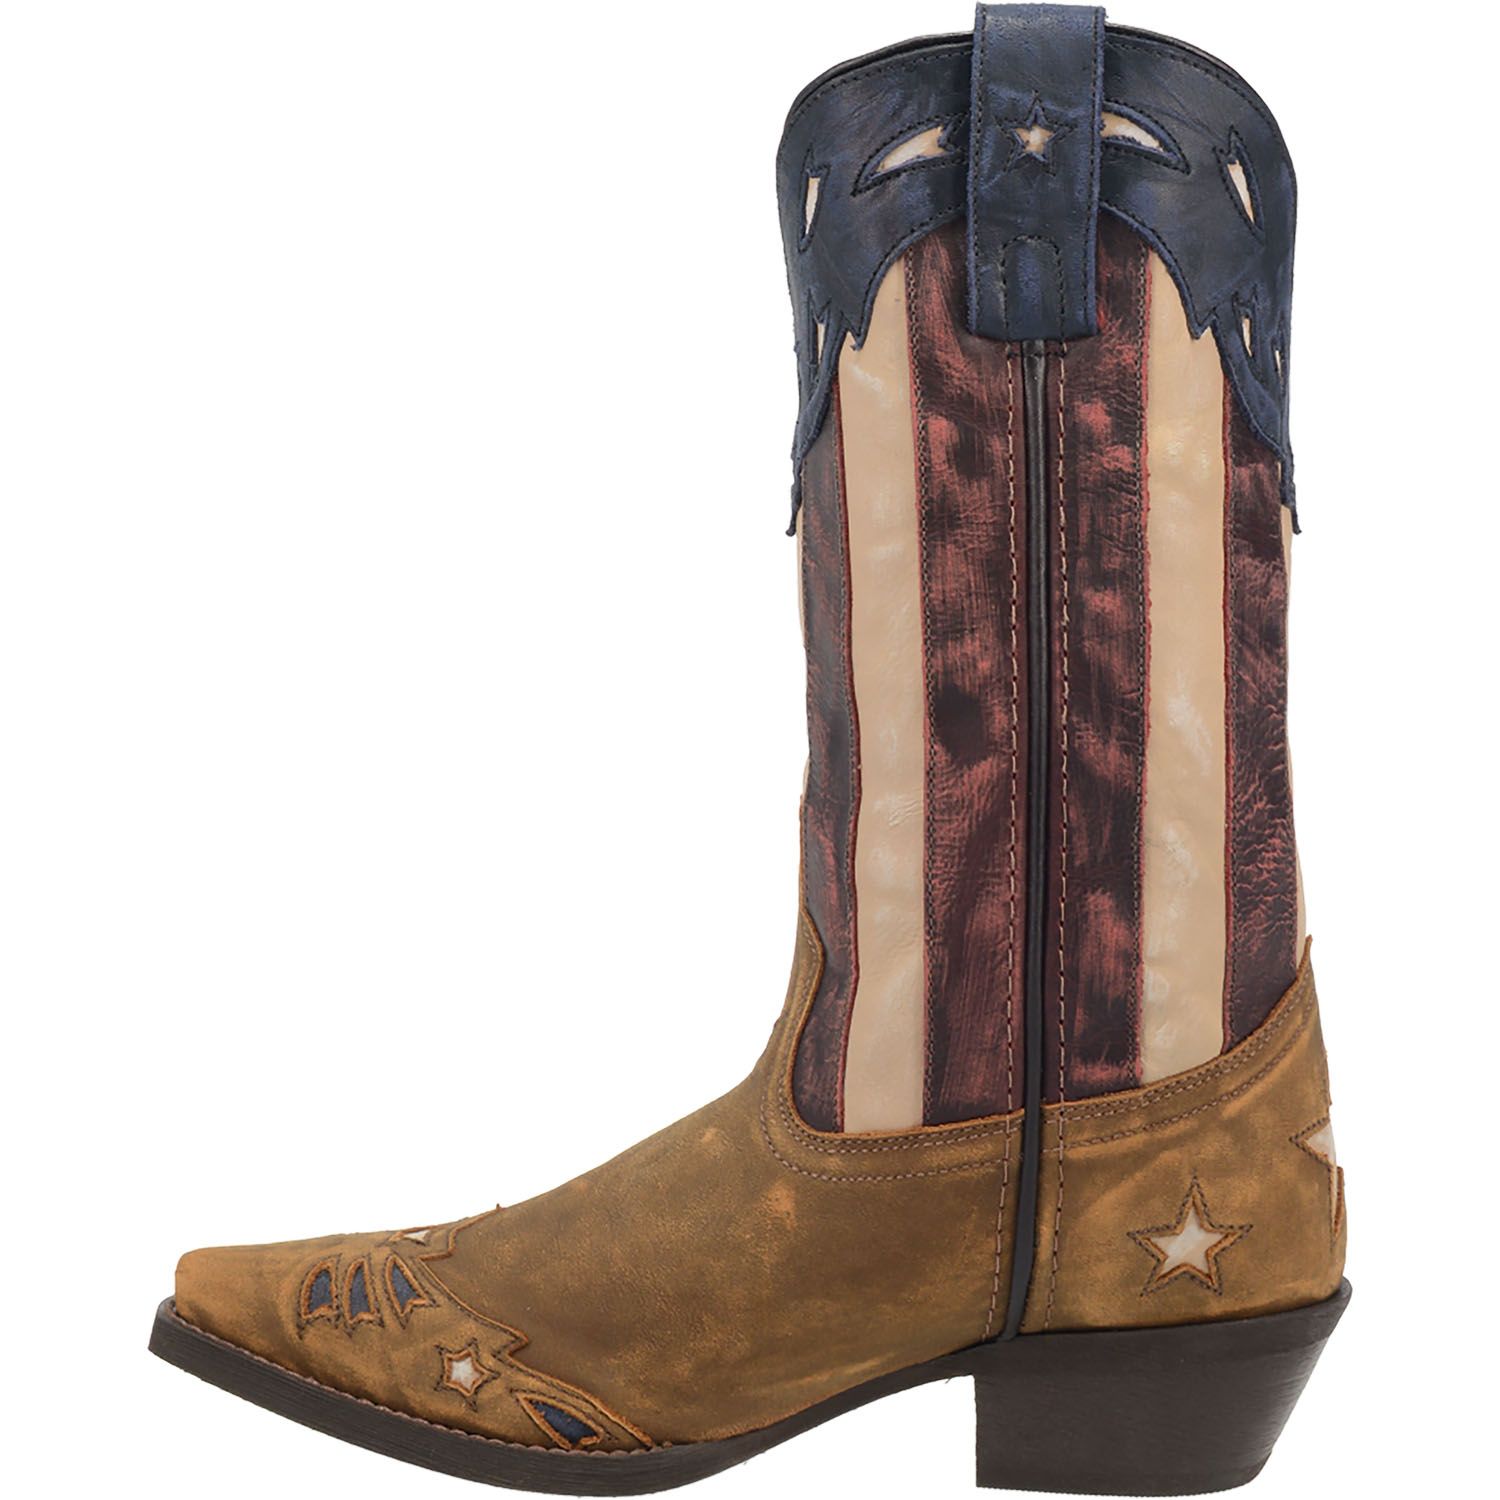 Pungo Ridge - Laredo Women's Keyes Boots - Tan, Women's Laredo Boots, 52165